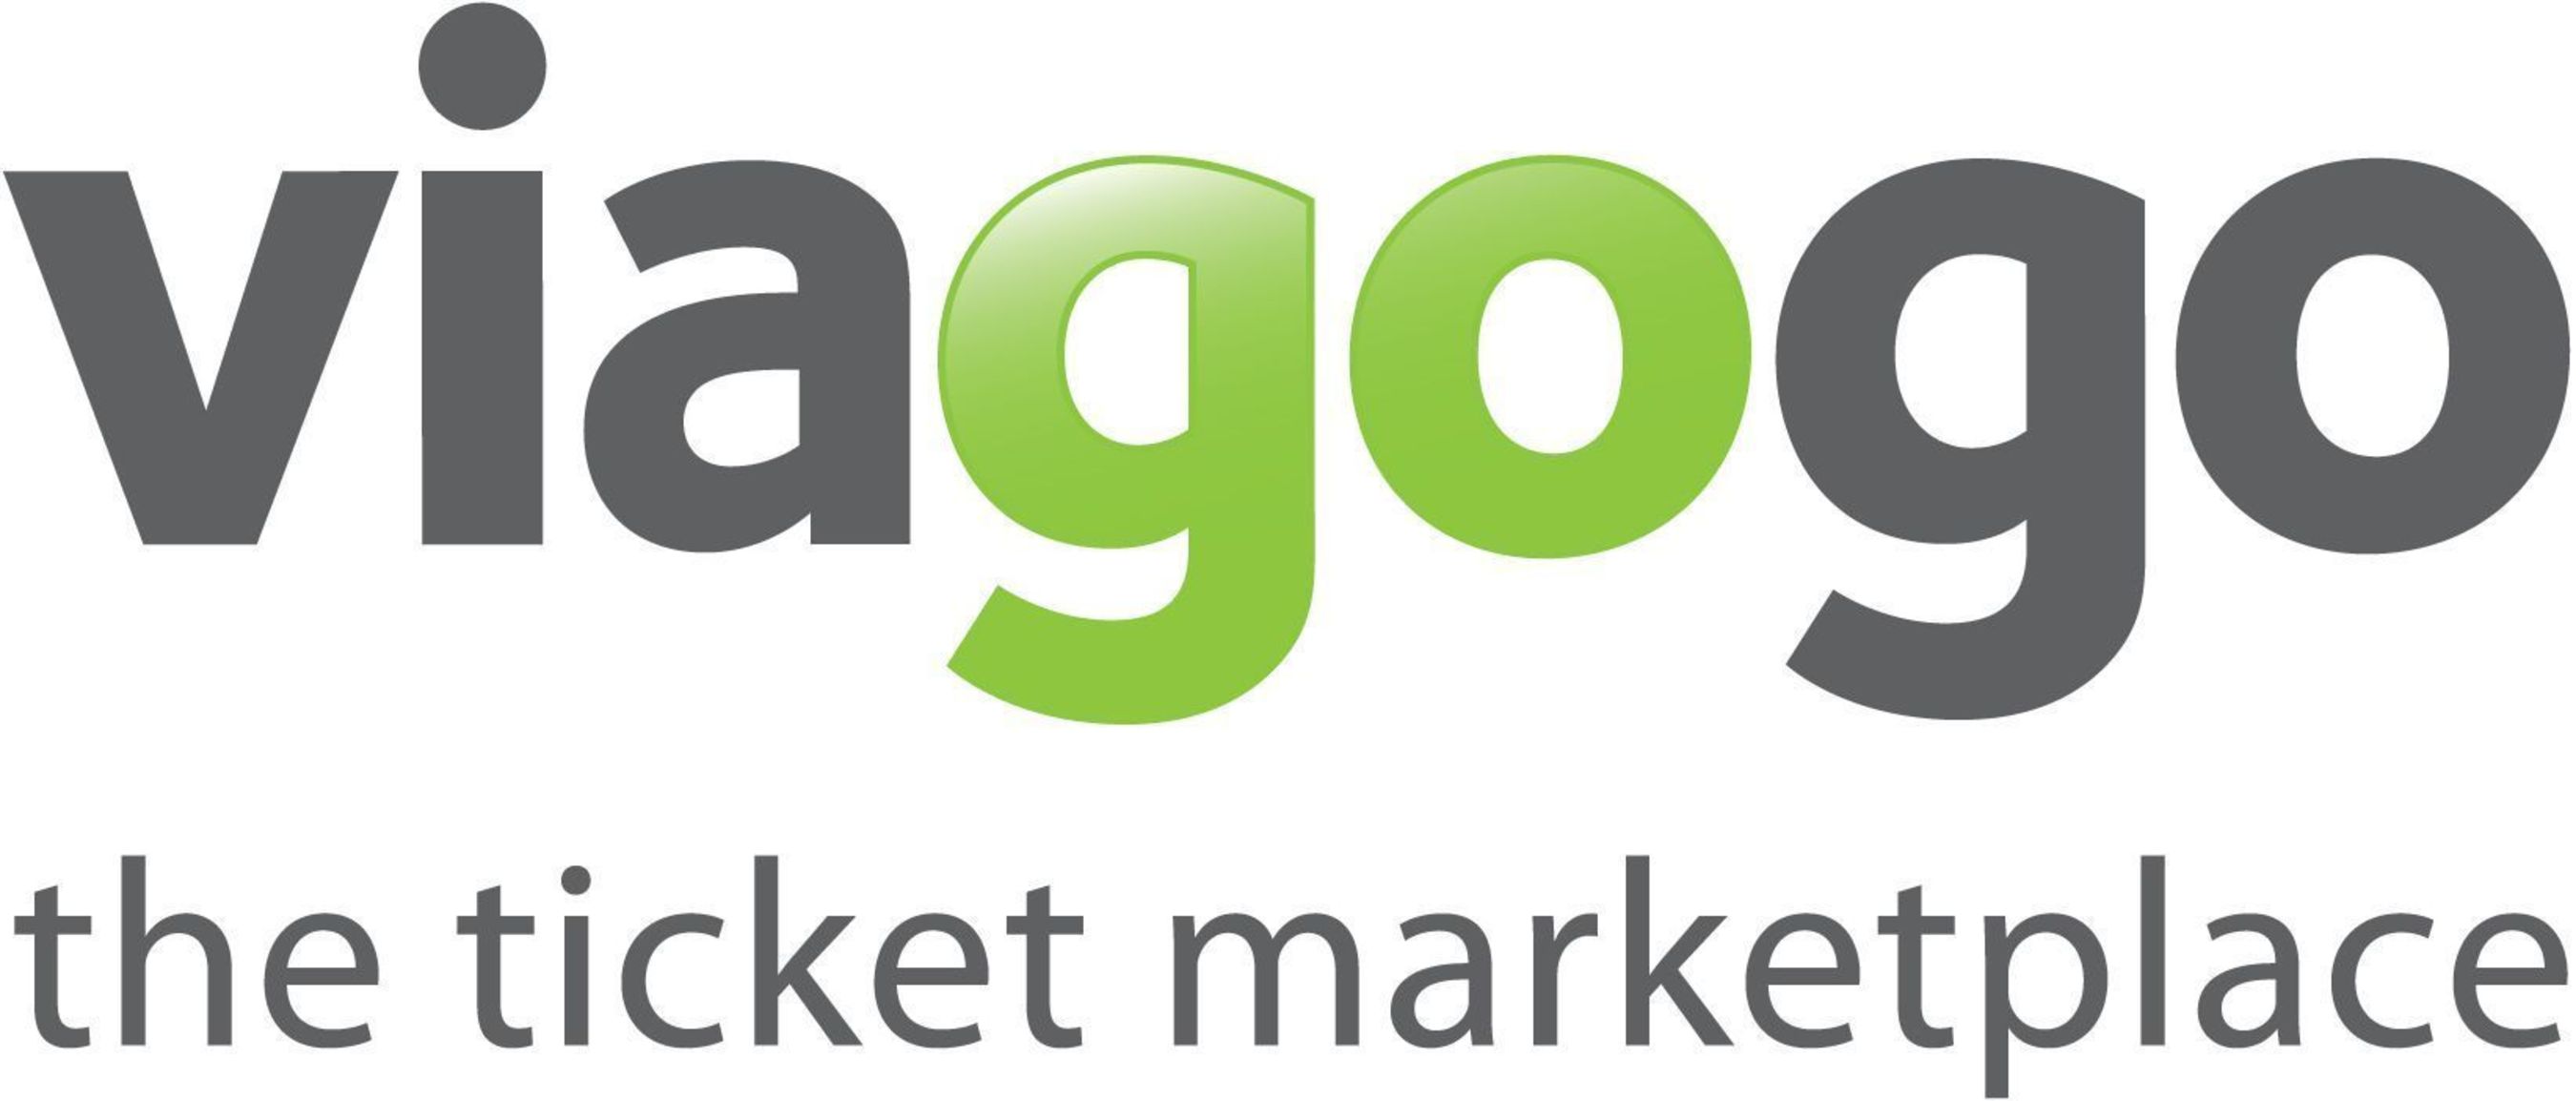 viagogo Celebrates New Milestone in International Expansion With Australian Launch